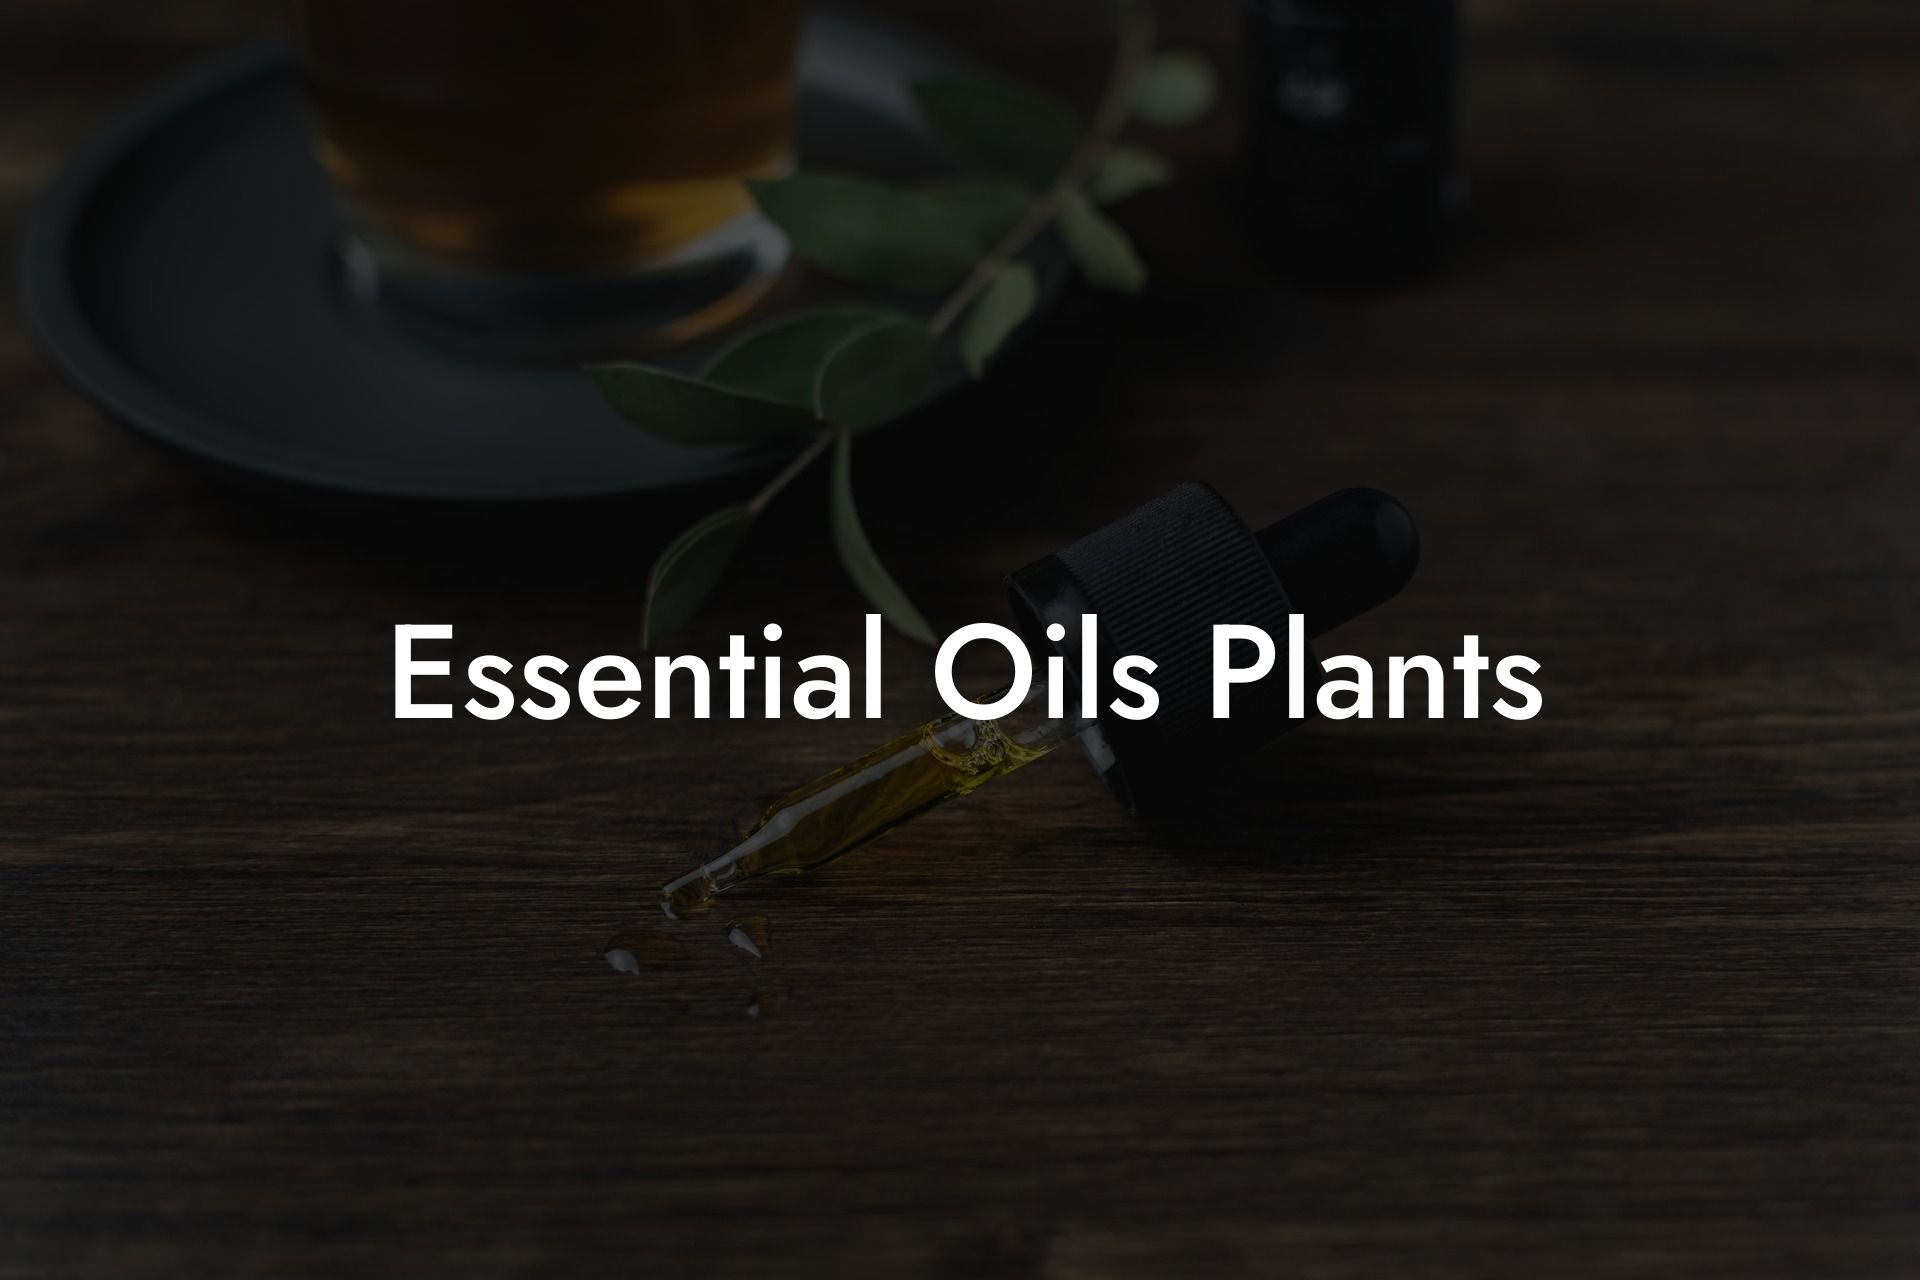 Essential Oils Plants